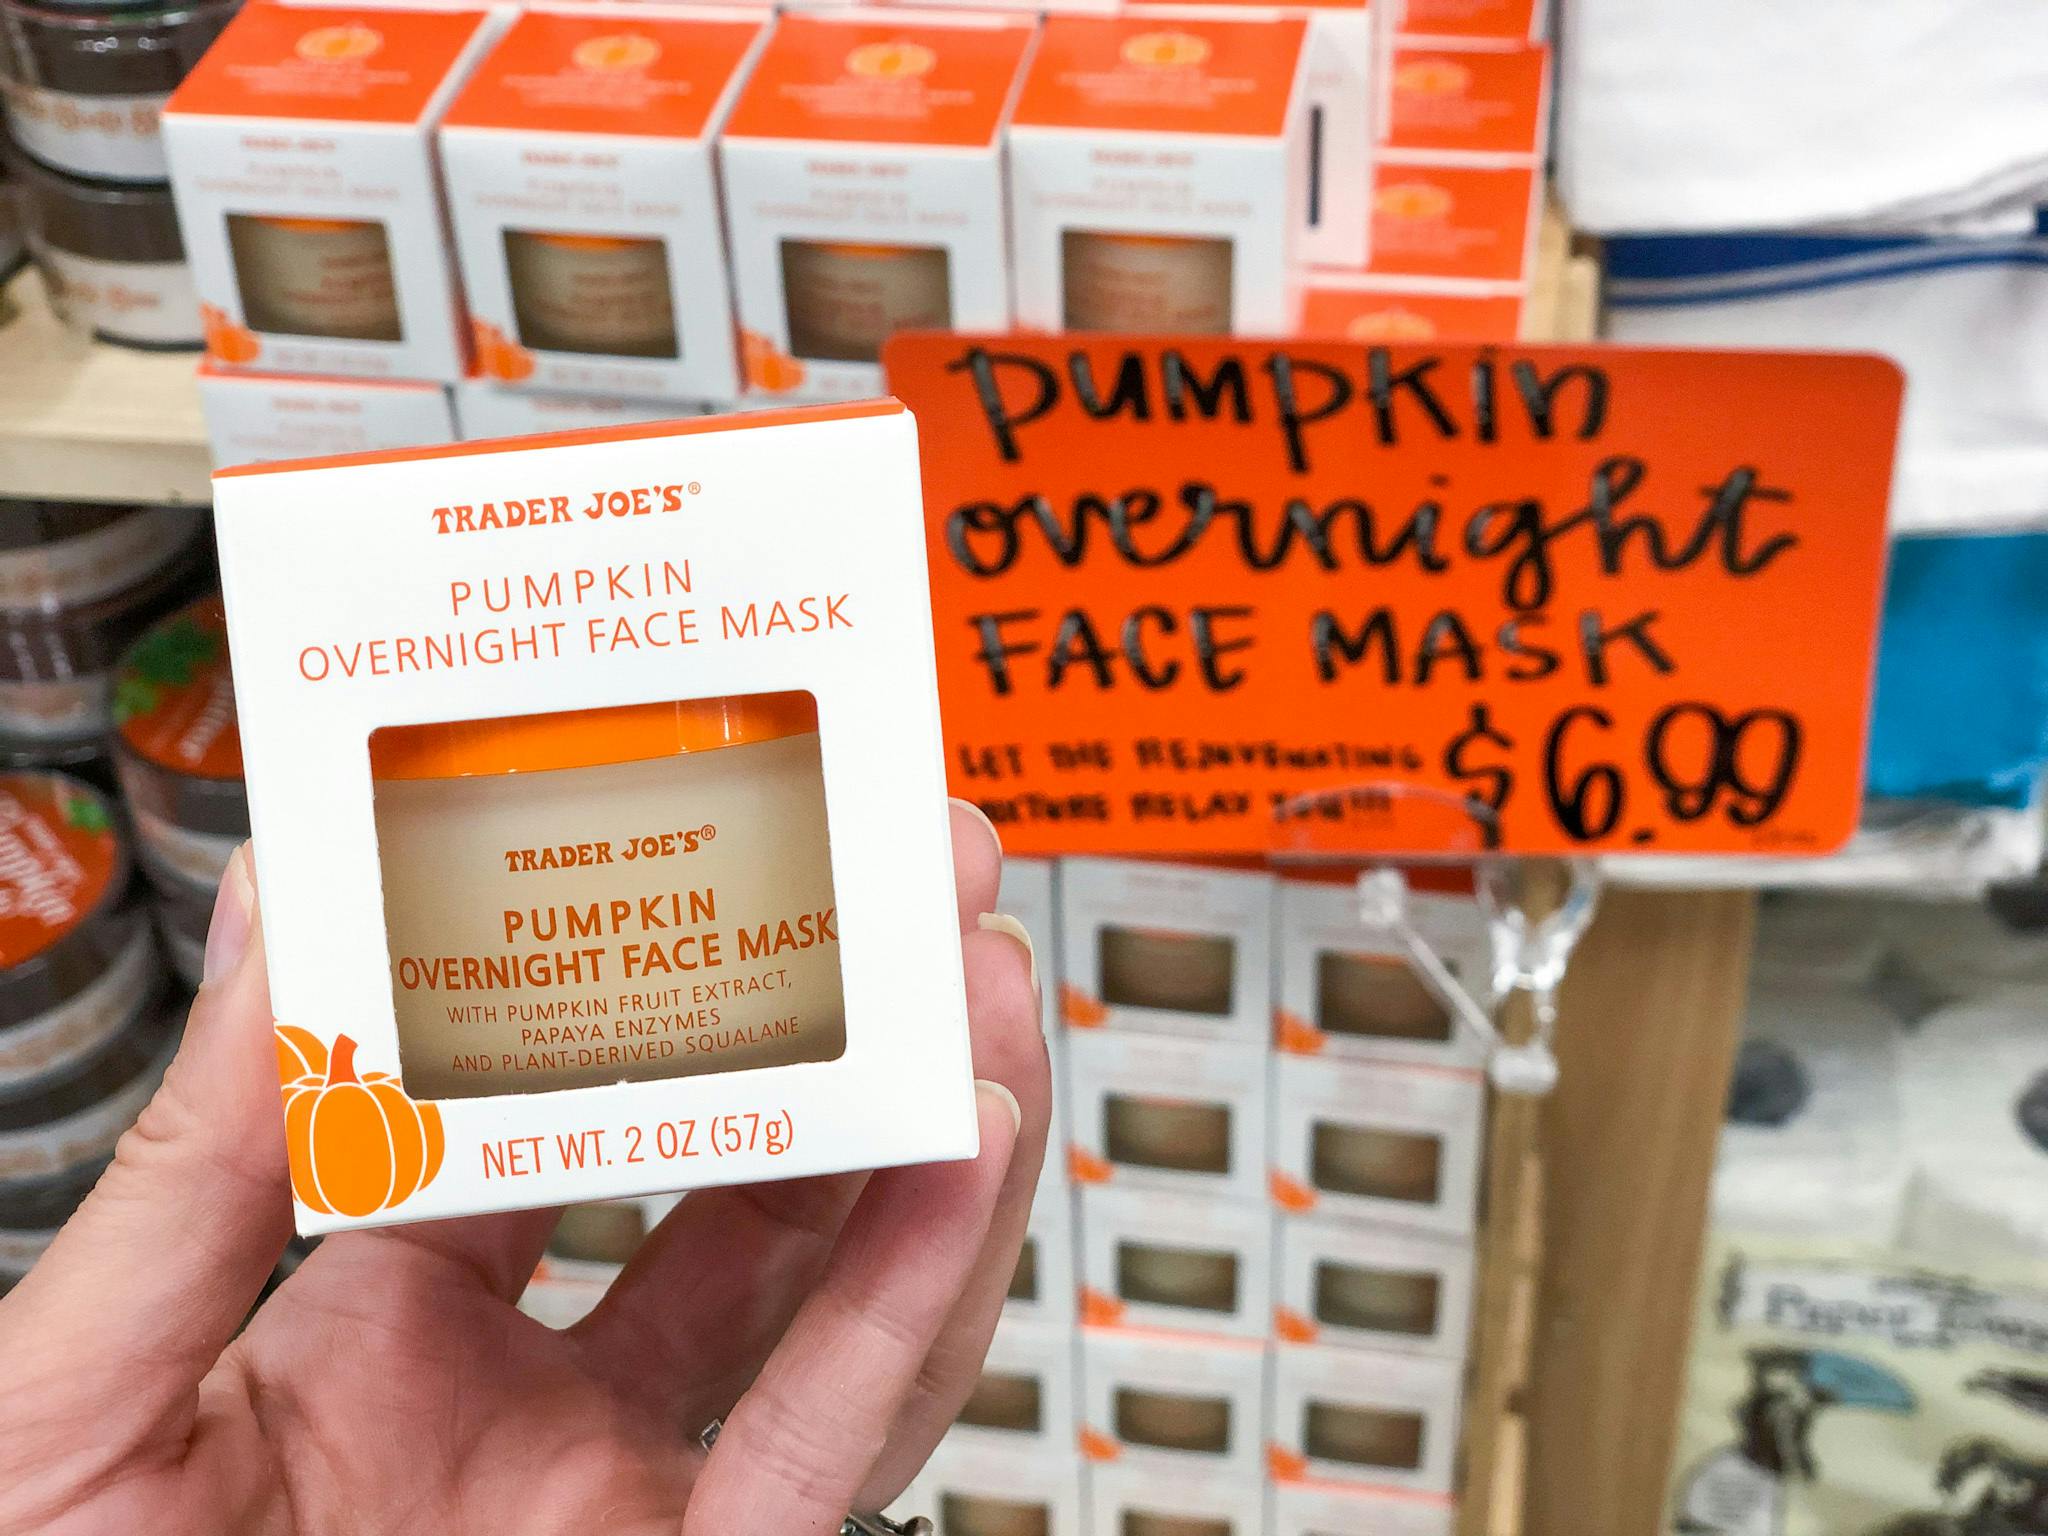 Trader Joe's pumpkin overnight face mask up close.